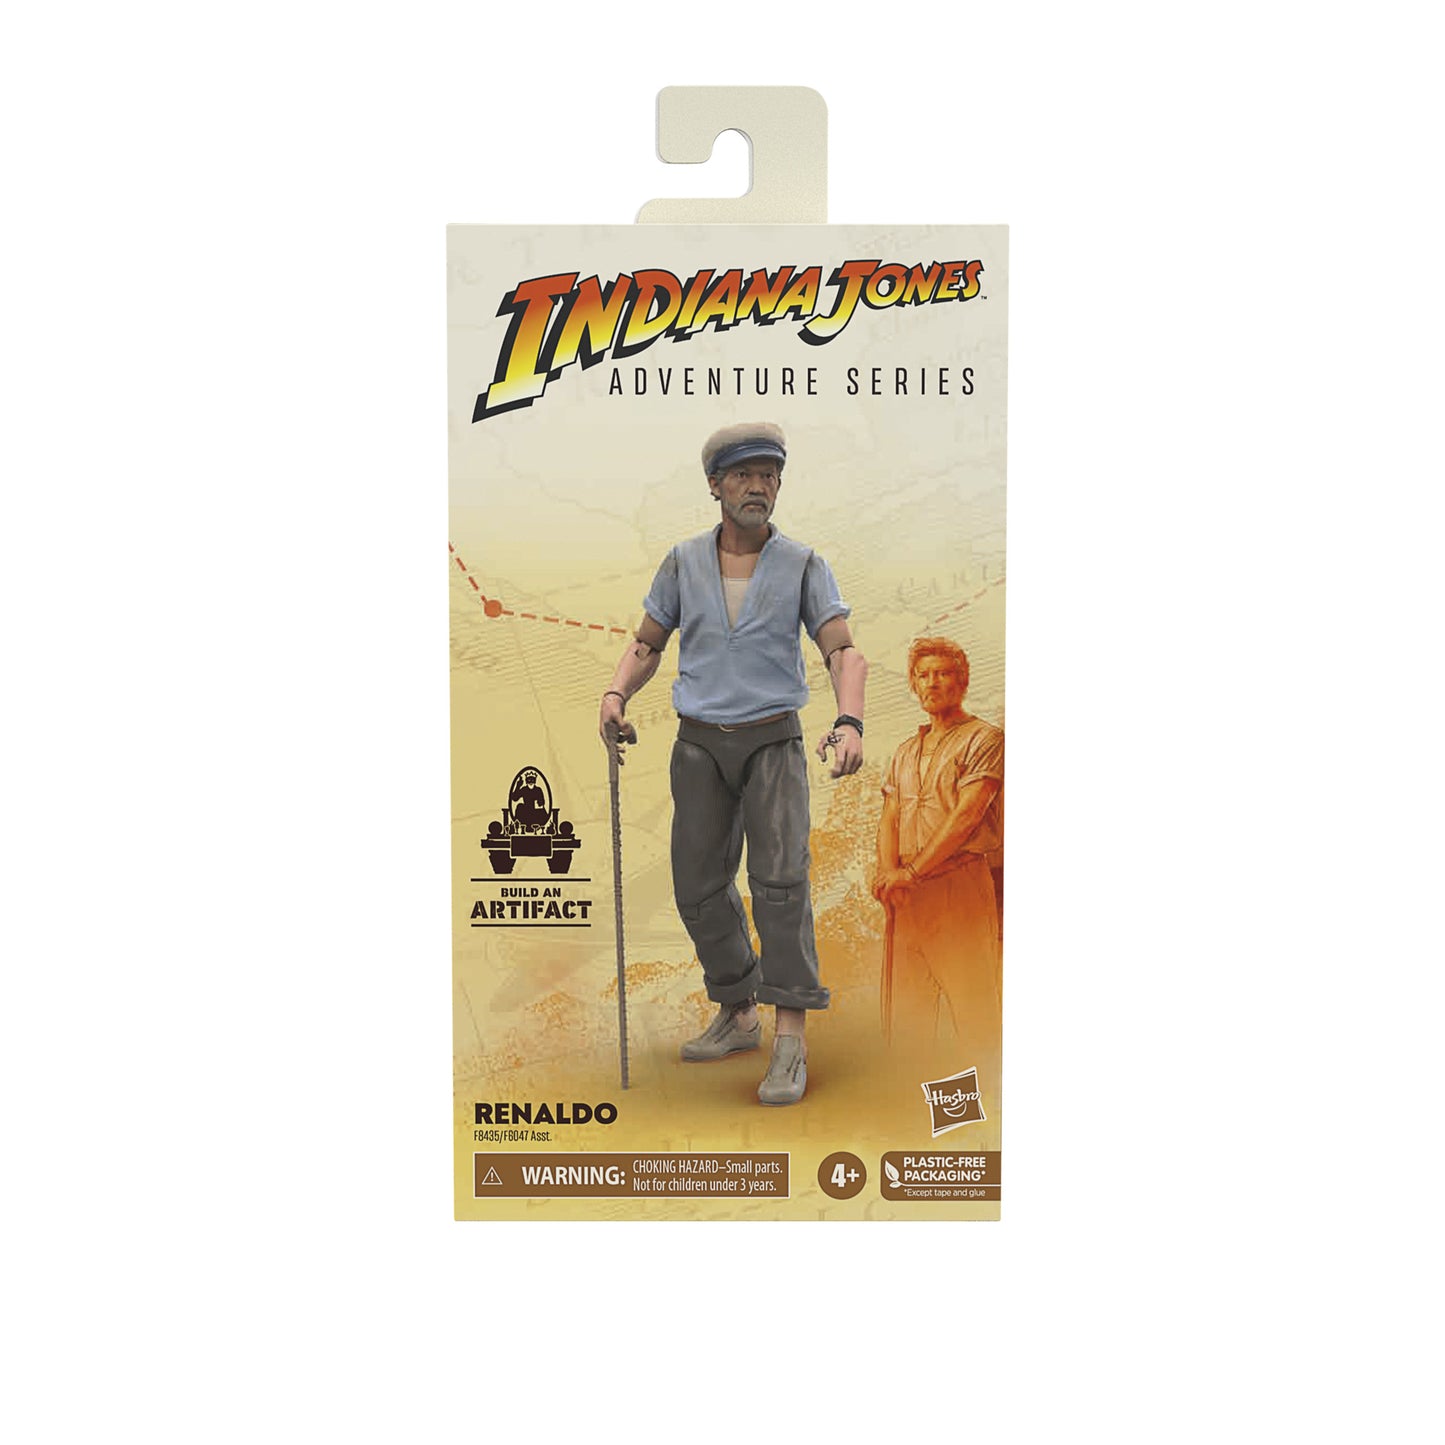 Indiana Jones Adventure Series Renaldo Action Figure in packaging - heretoserveyou